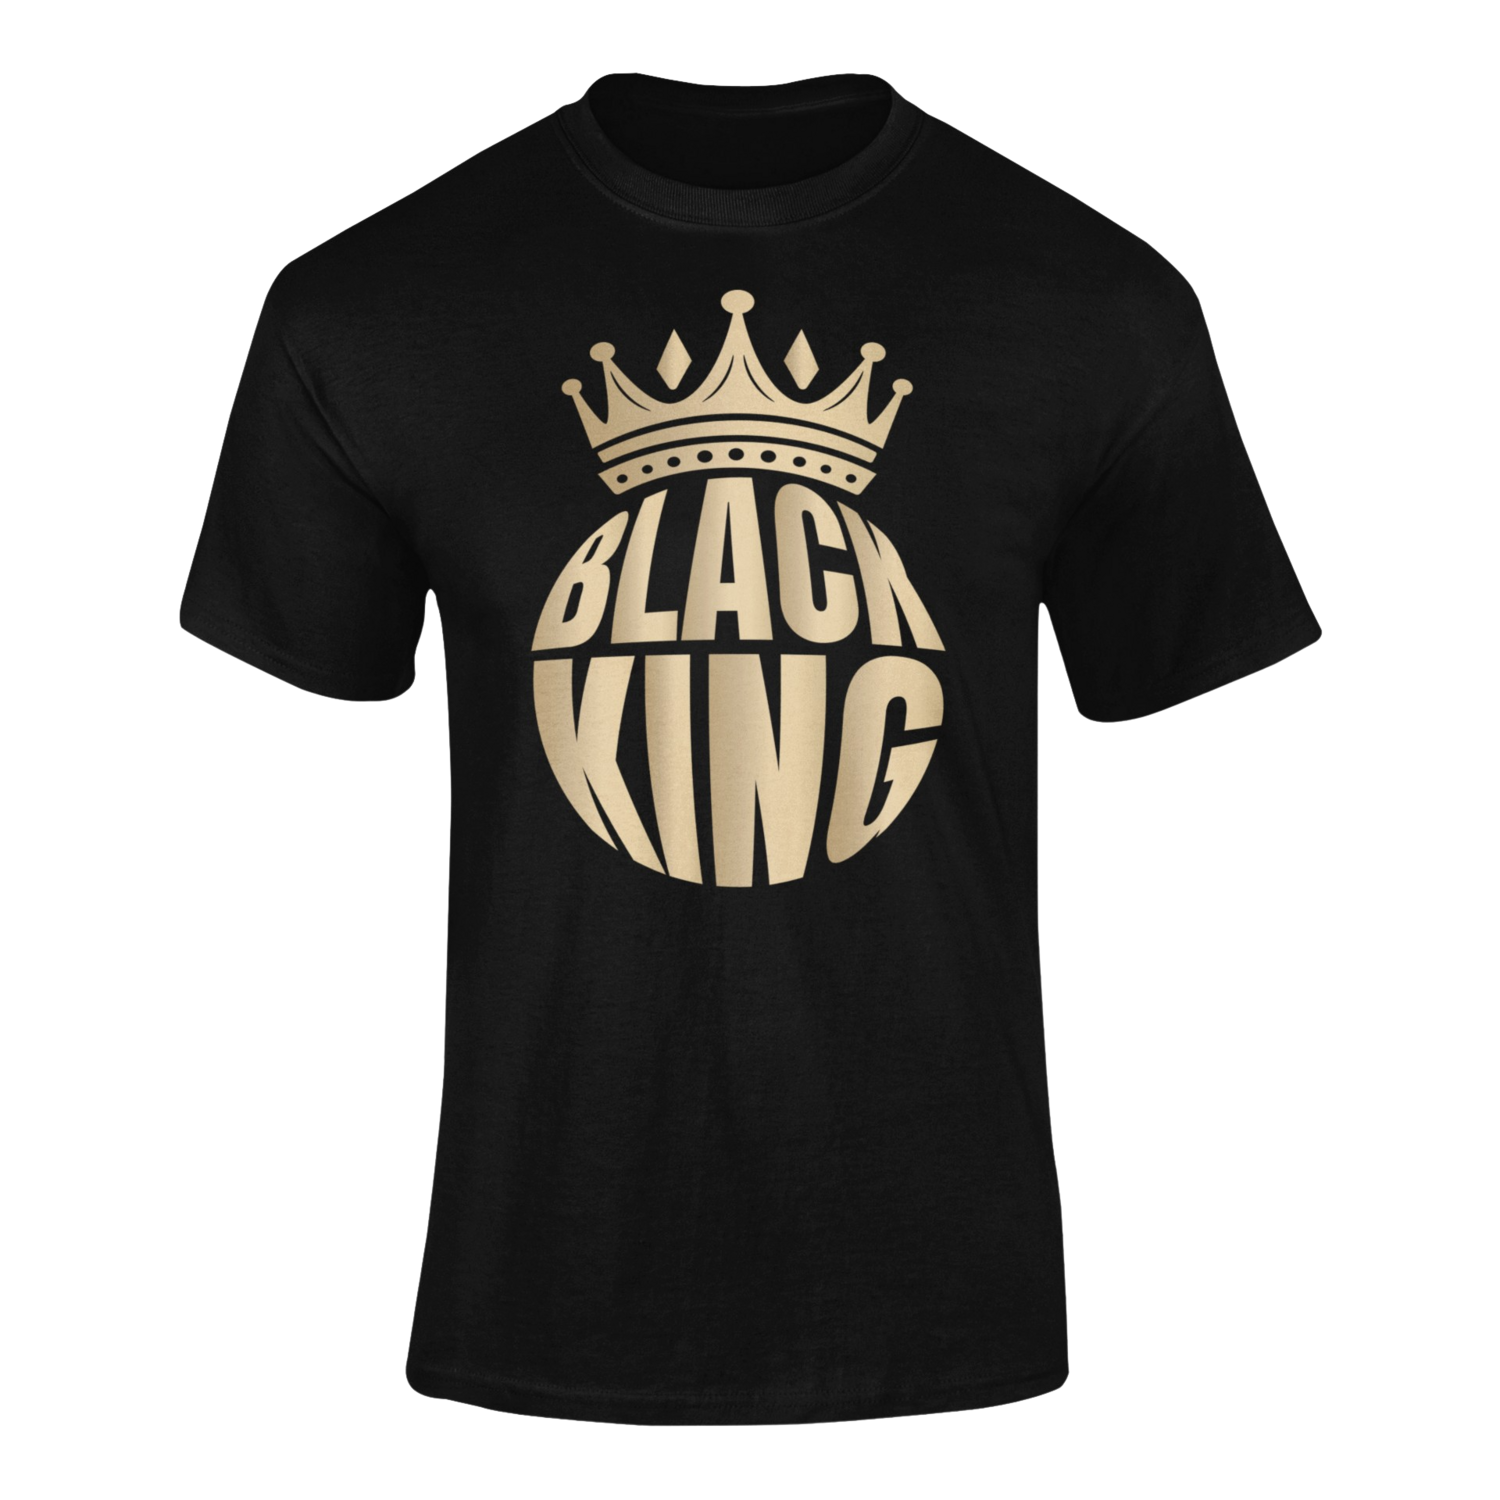 CROWN BLACK KING